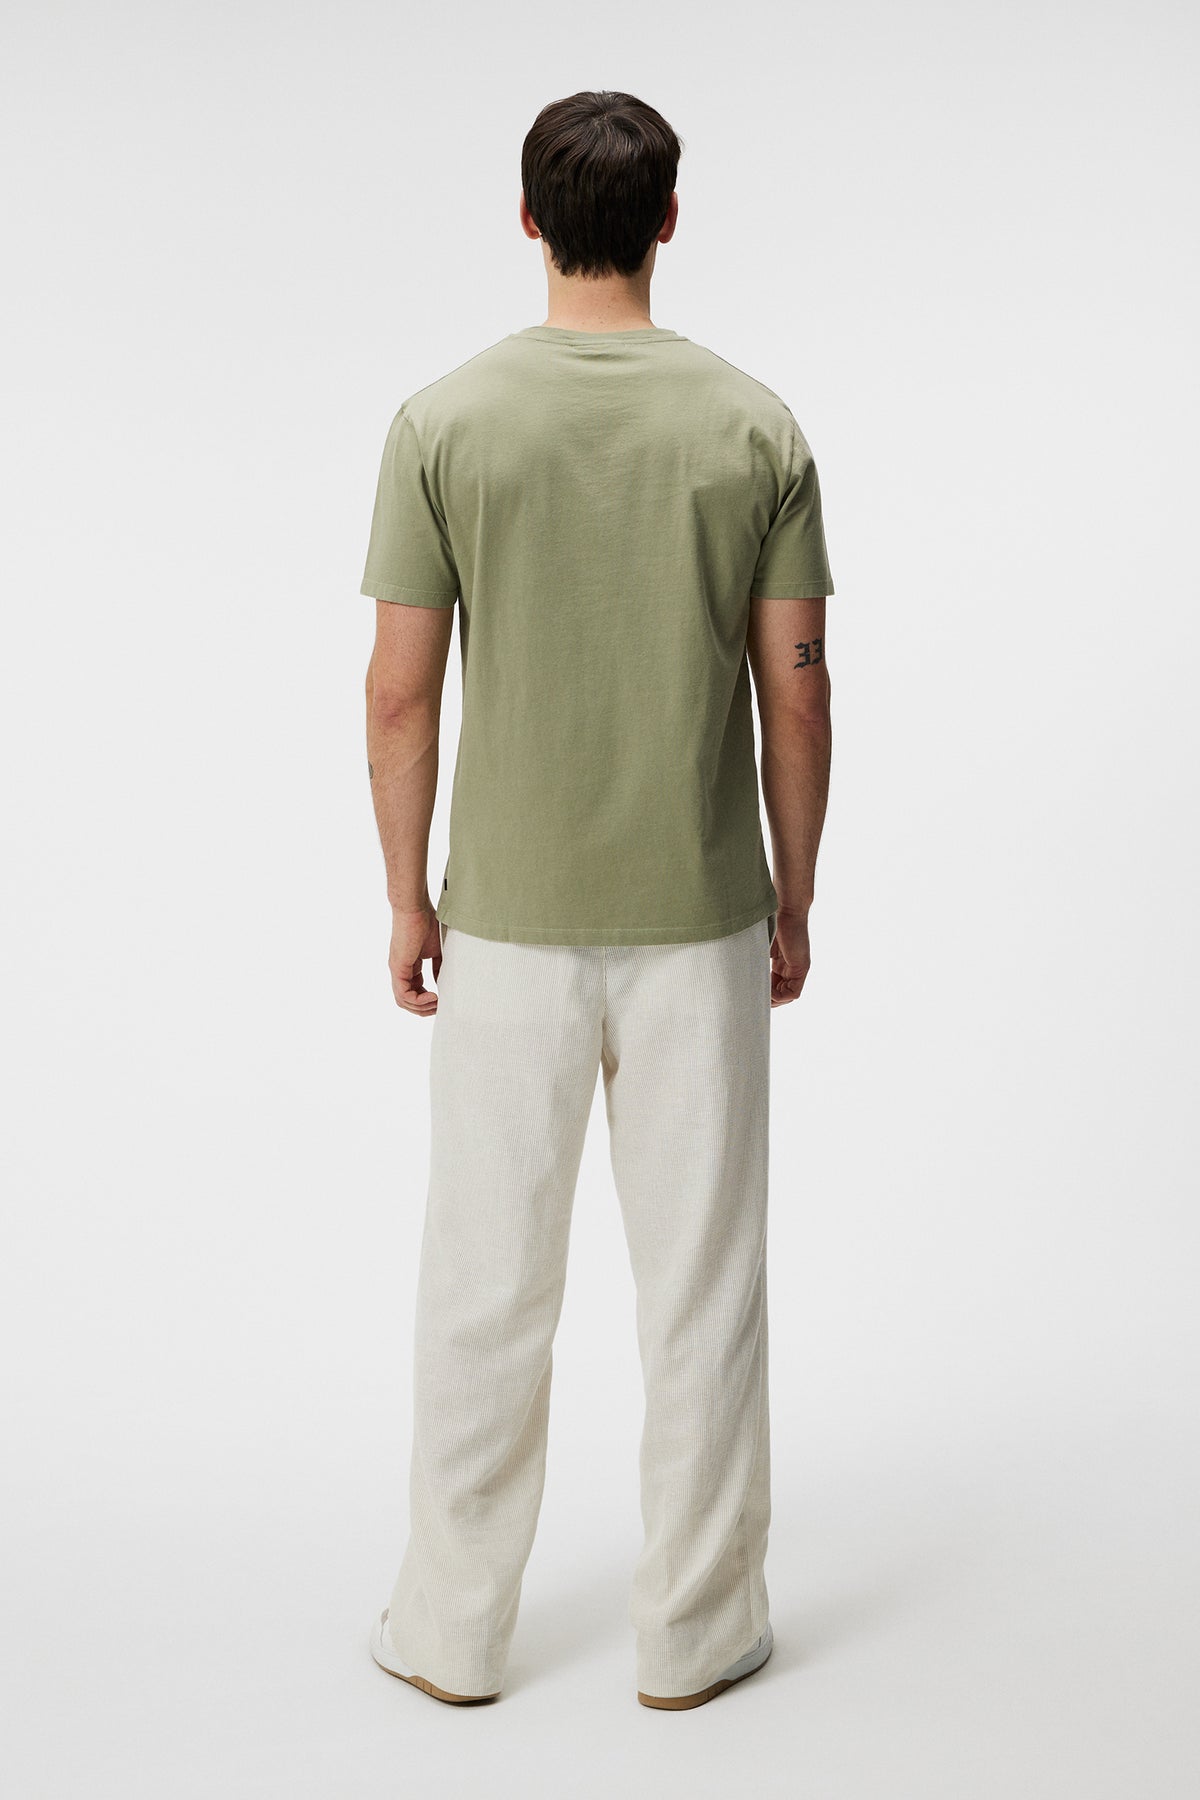 Sid Basic T-Shirt / Oil Green